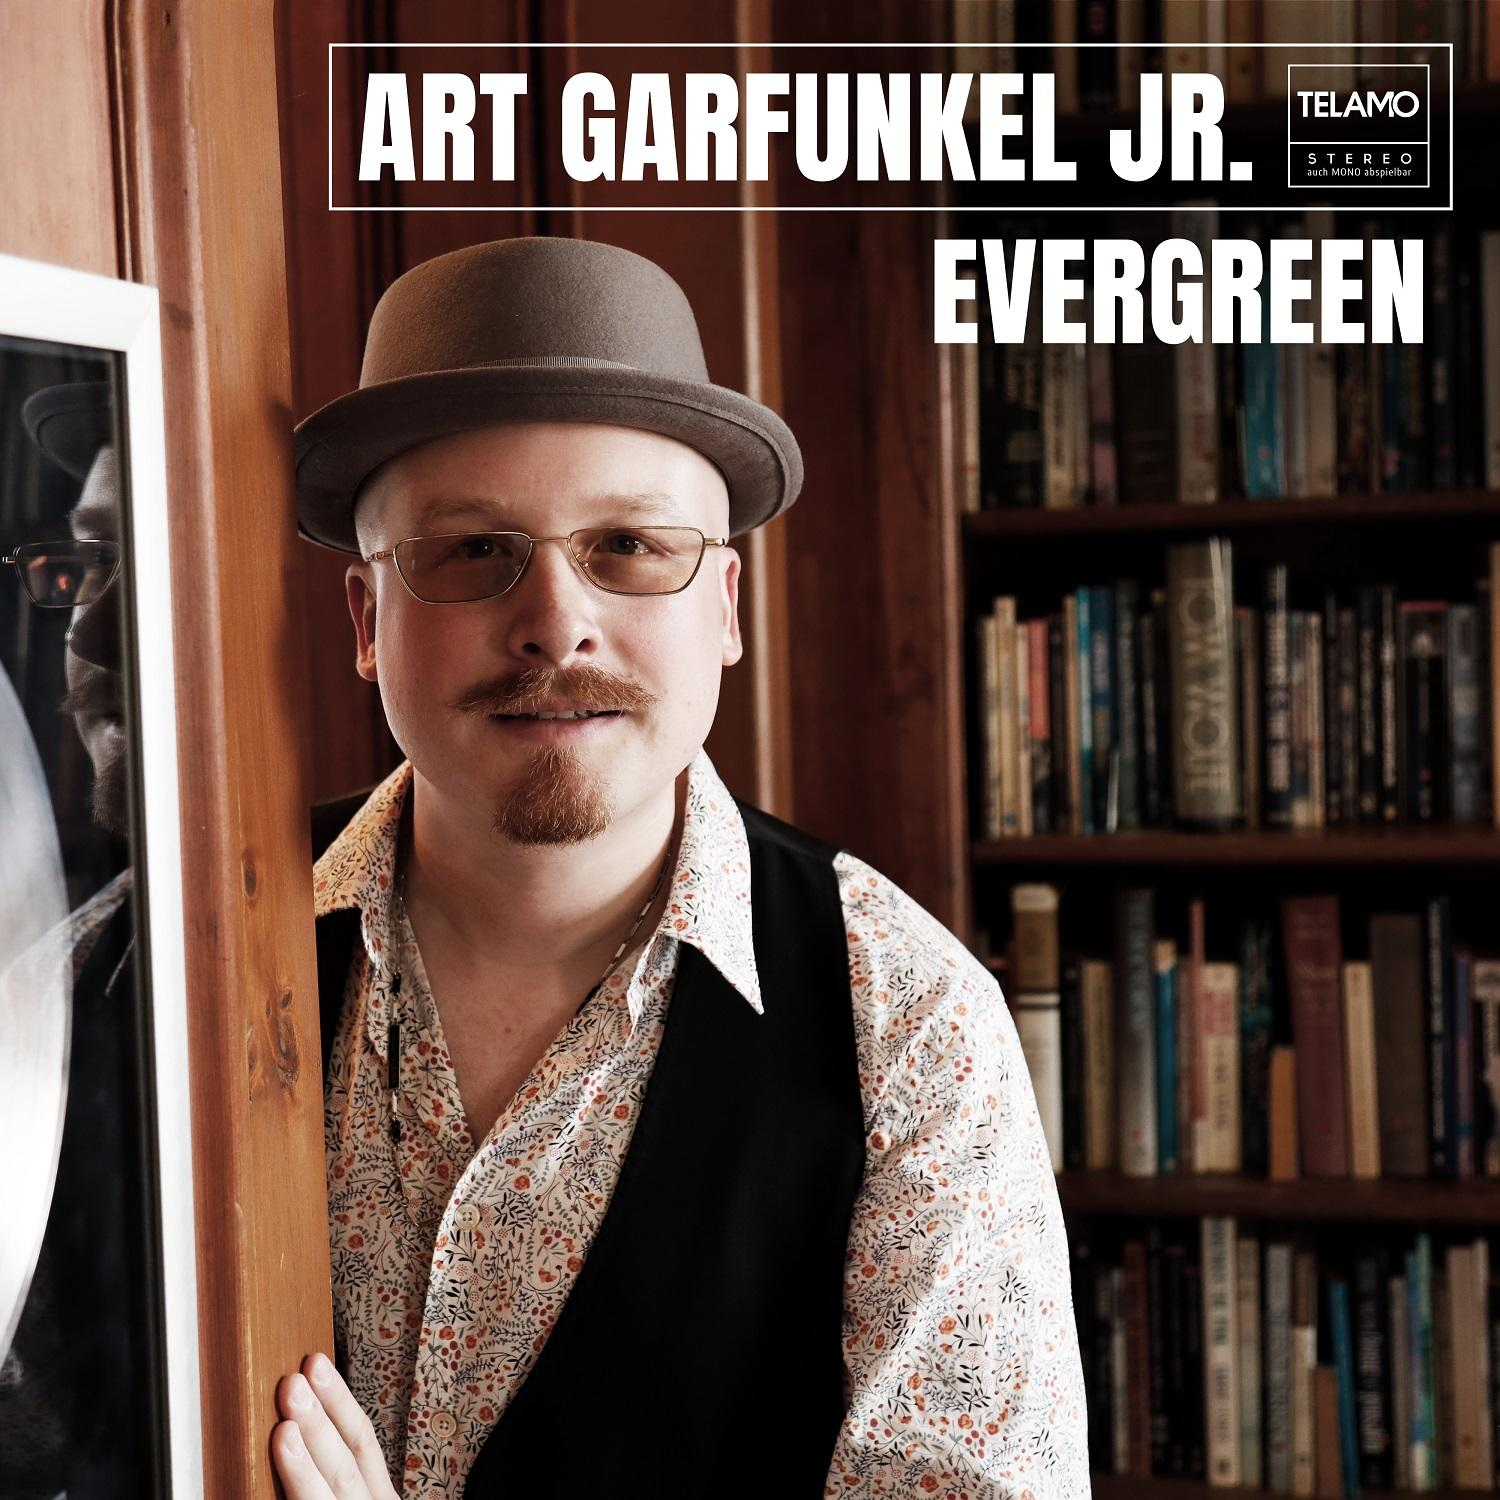 Art (CD) Garfunkel - Evergreen Jr. -